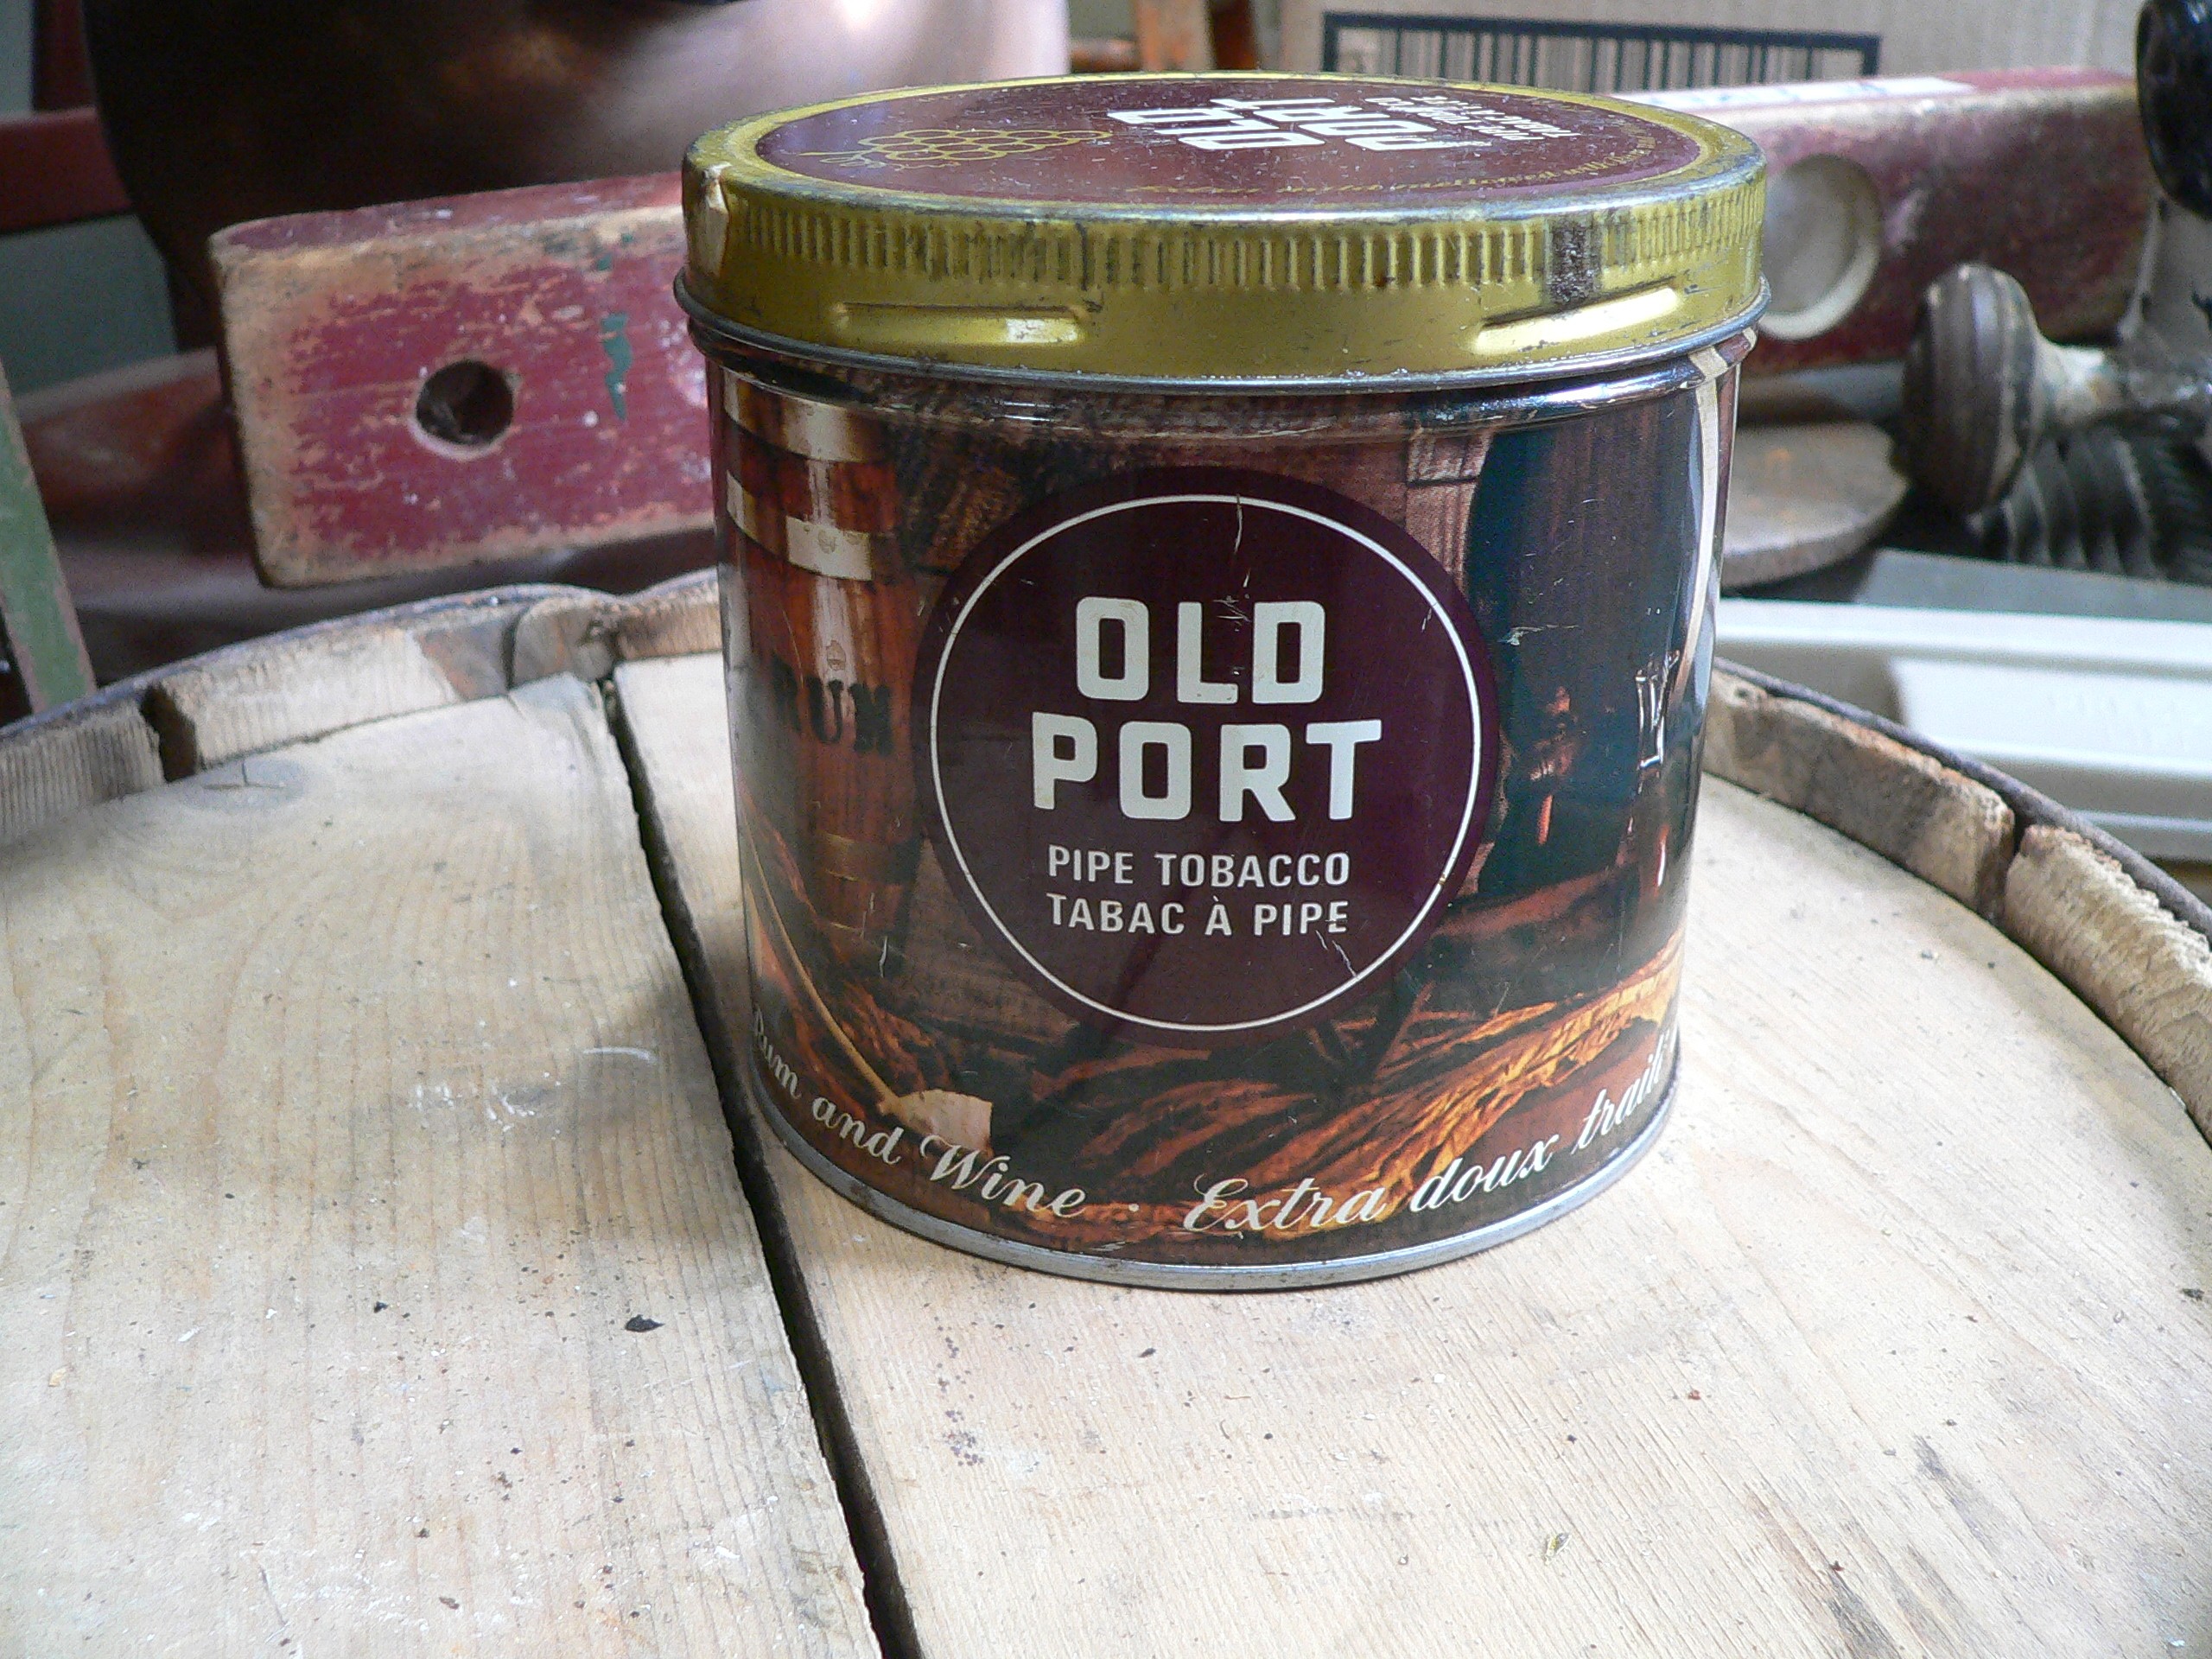 Canne de tabac old port # 7311.17